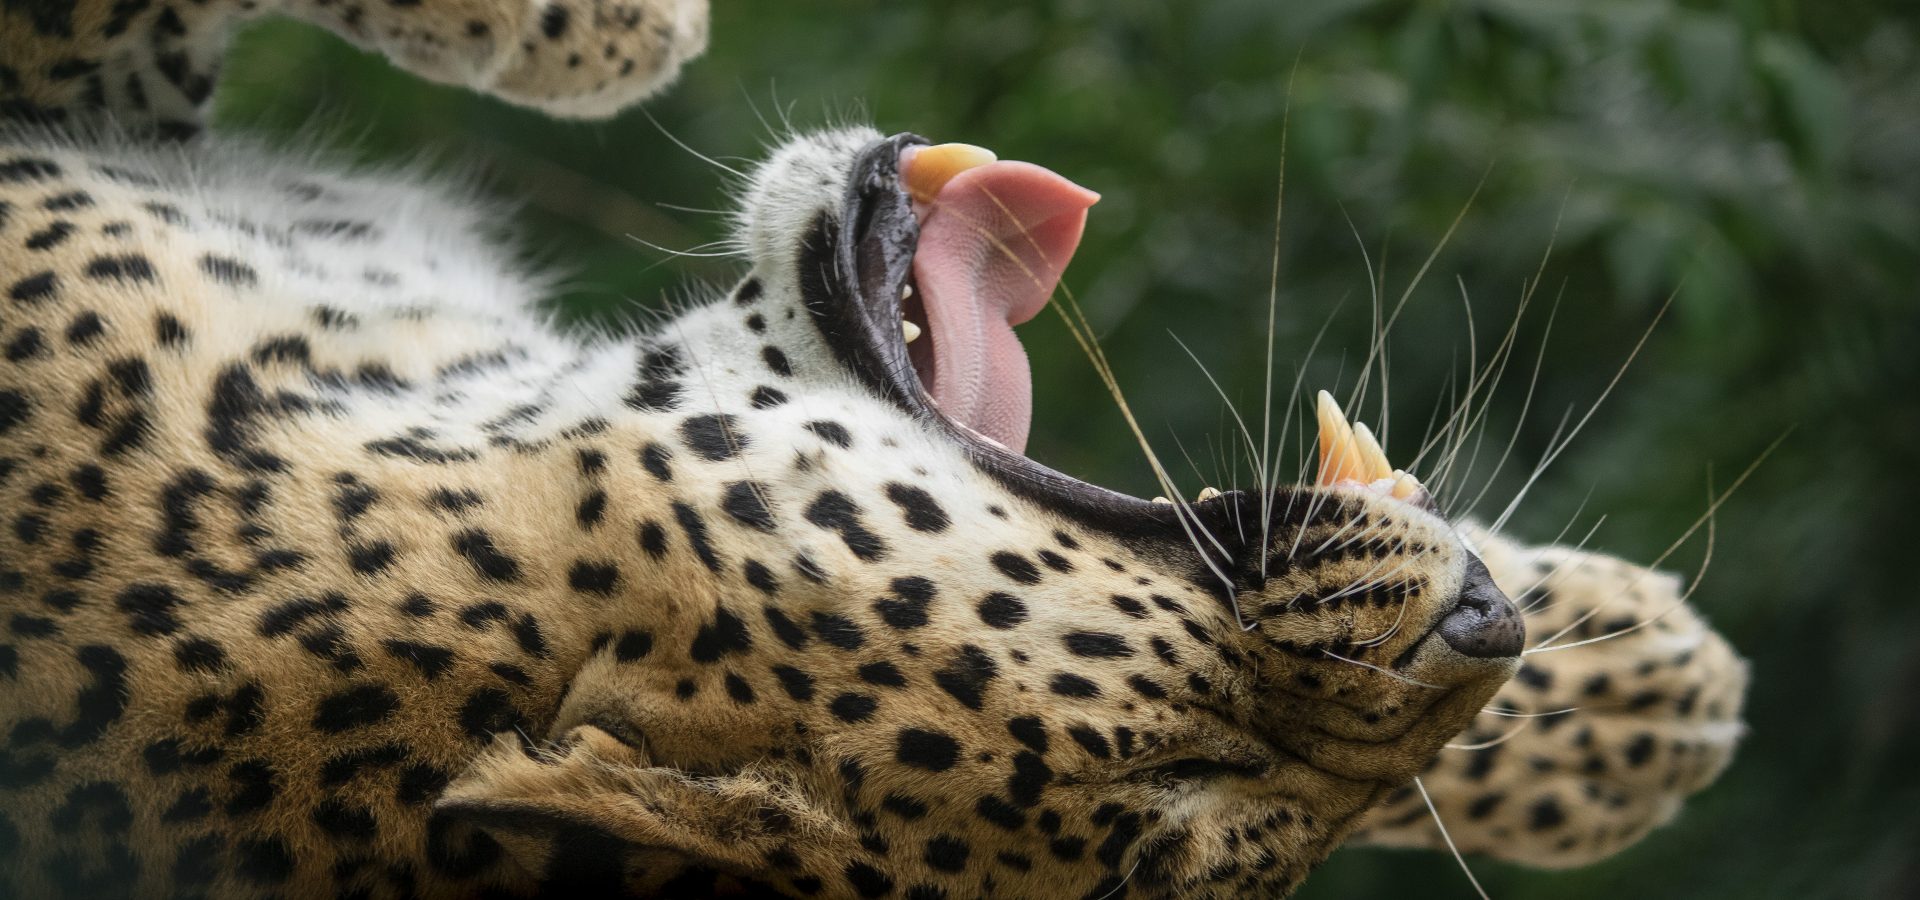 leopards eating humans